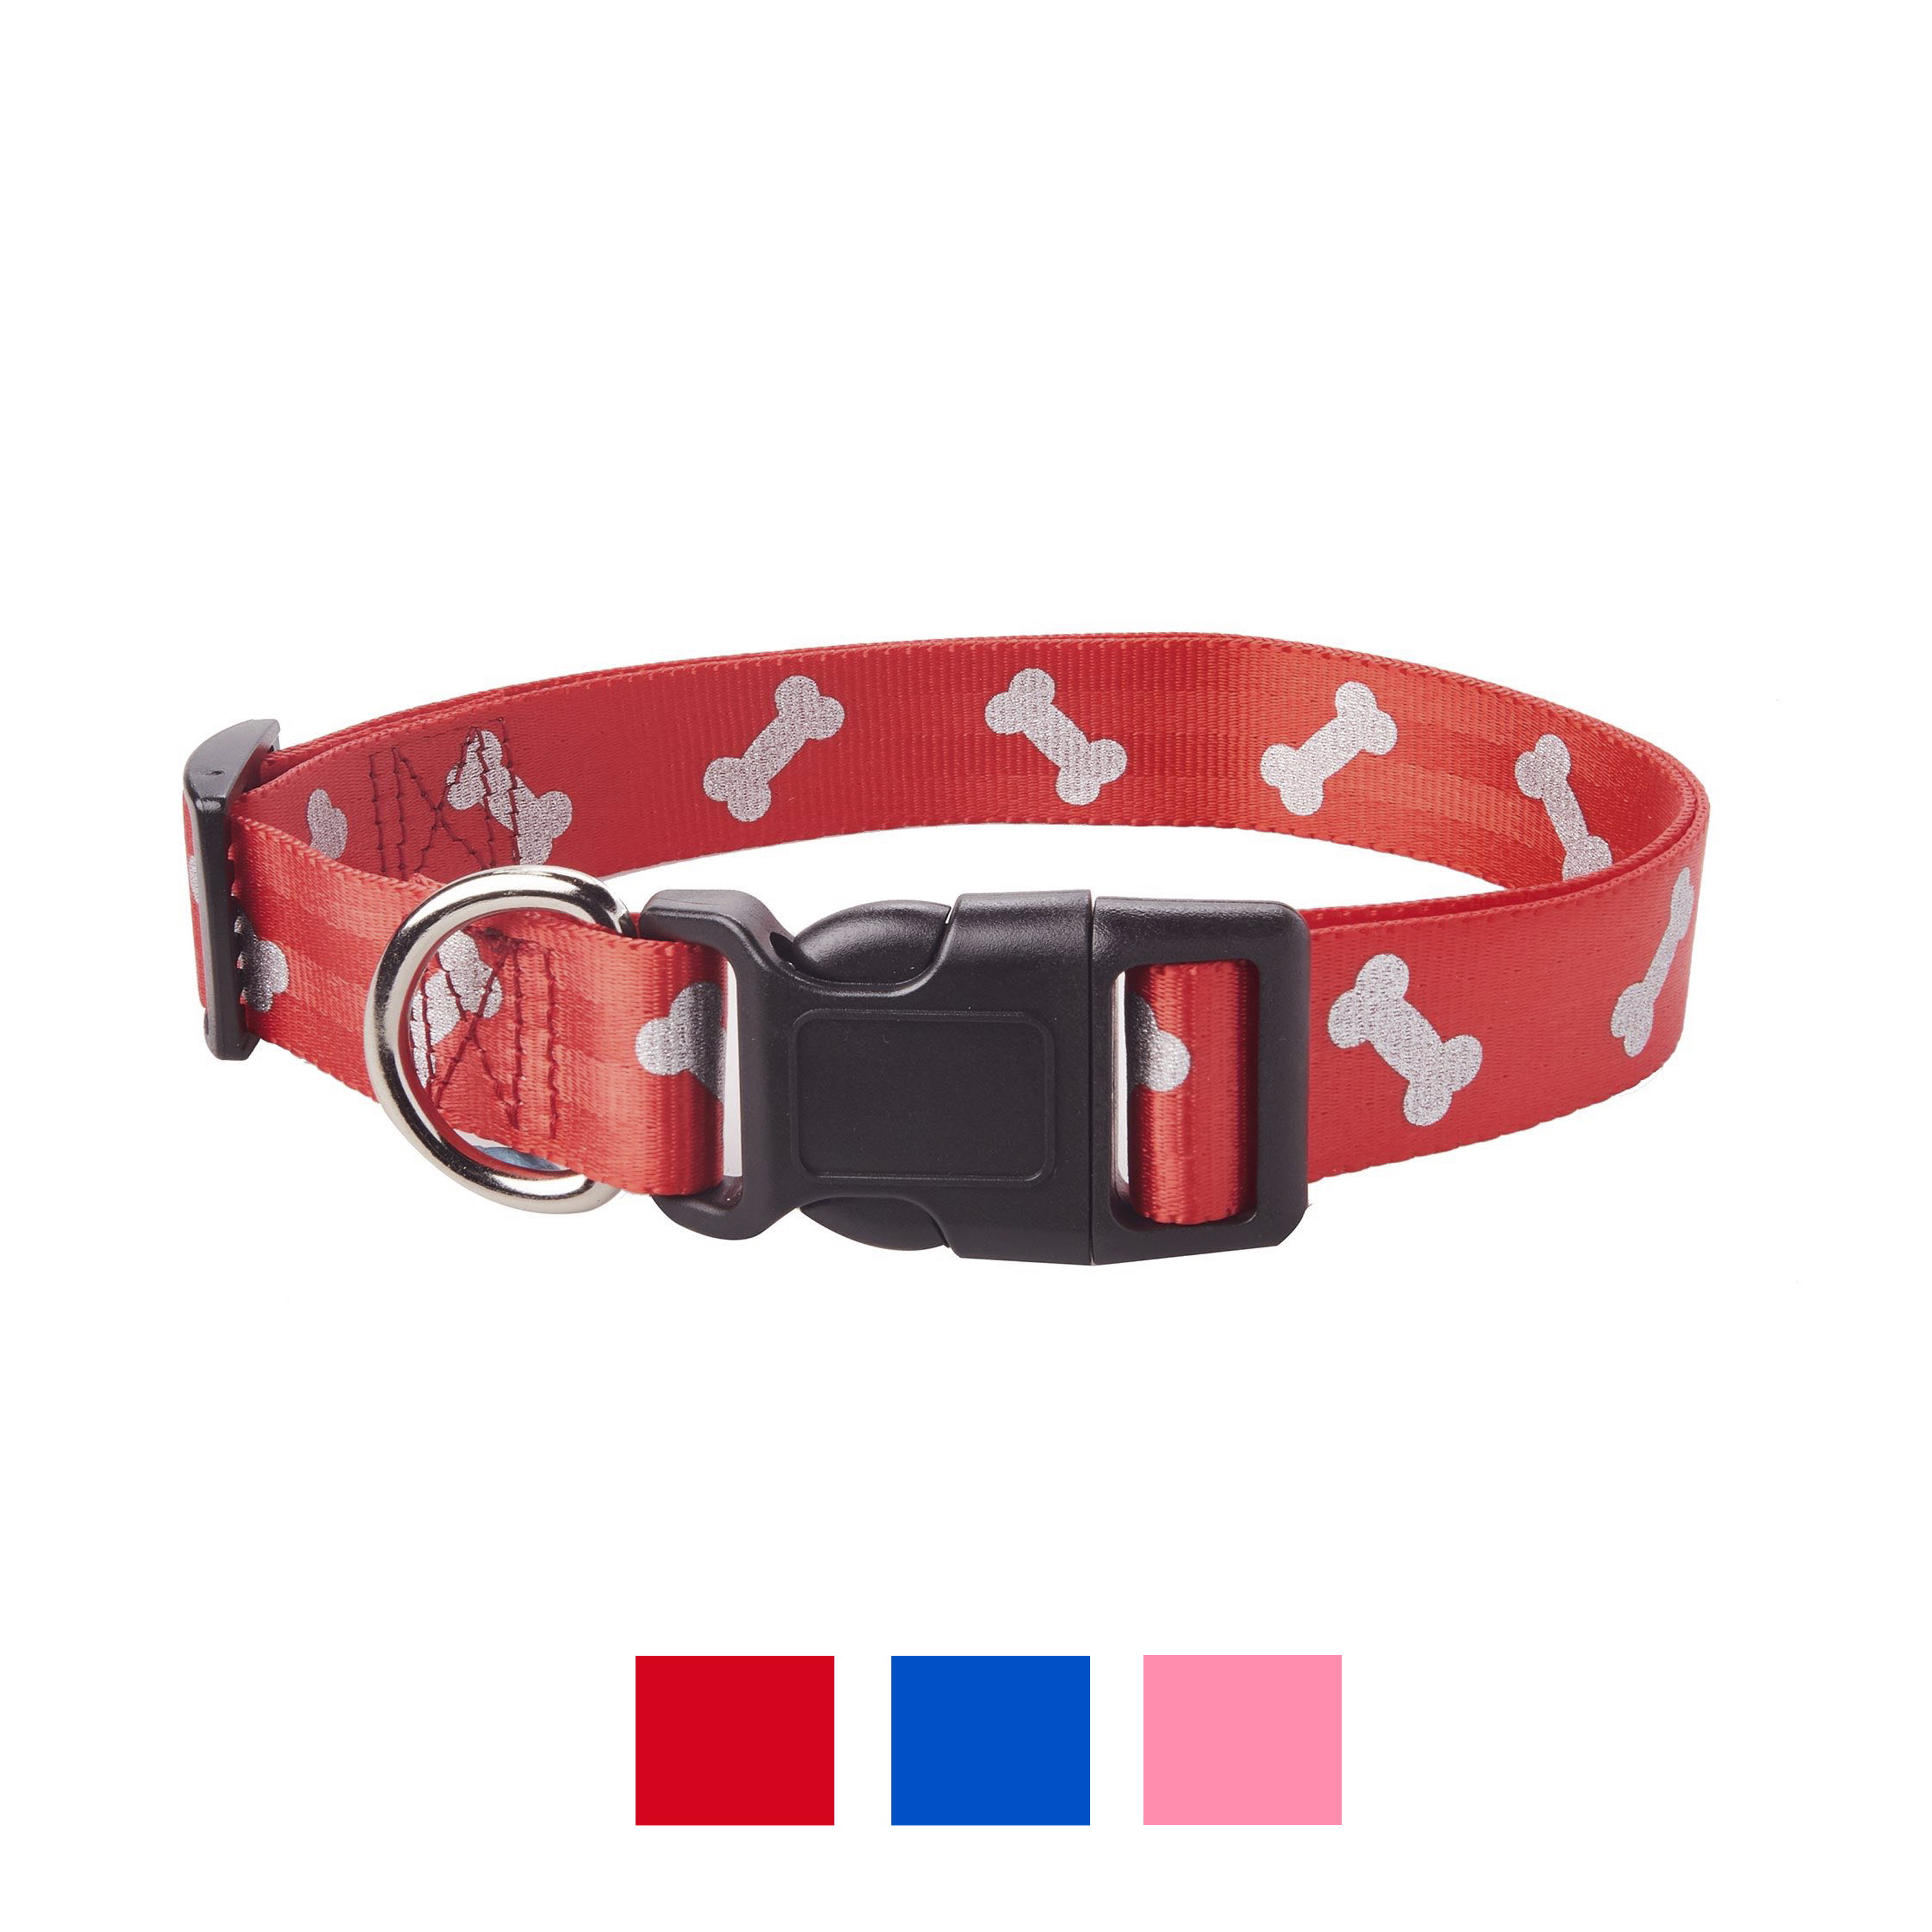 Vibrant Life Nylon/Polyester Fashion Dog Collar, Red Bones, L - image 1 of 2